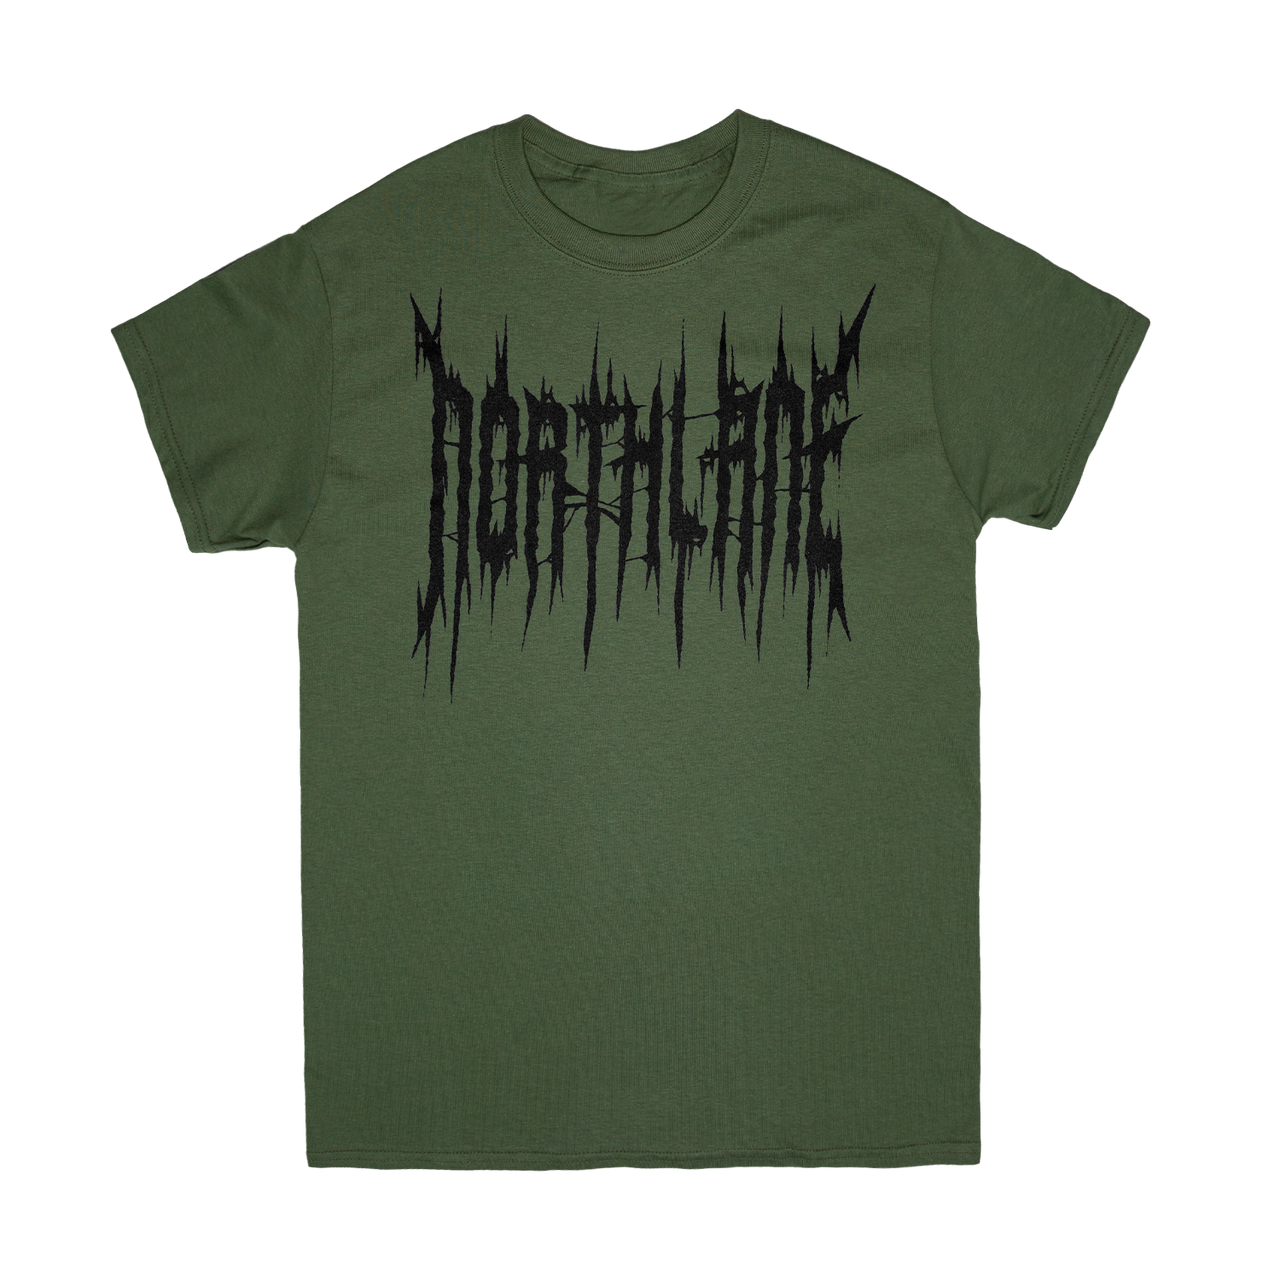 Northlane Death Metal T-Shirt (Military Green)